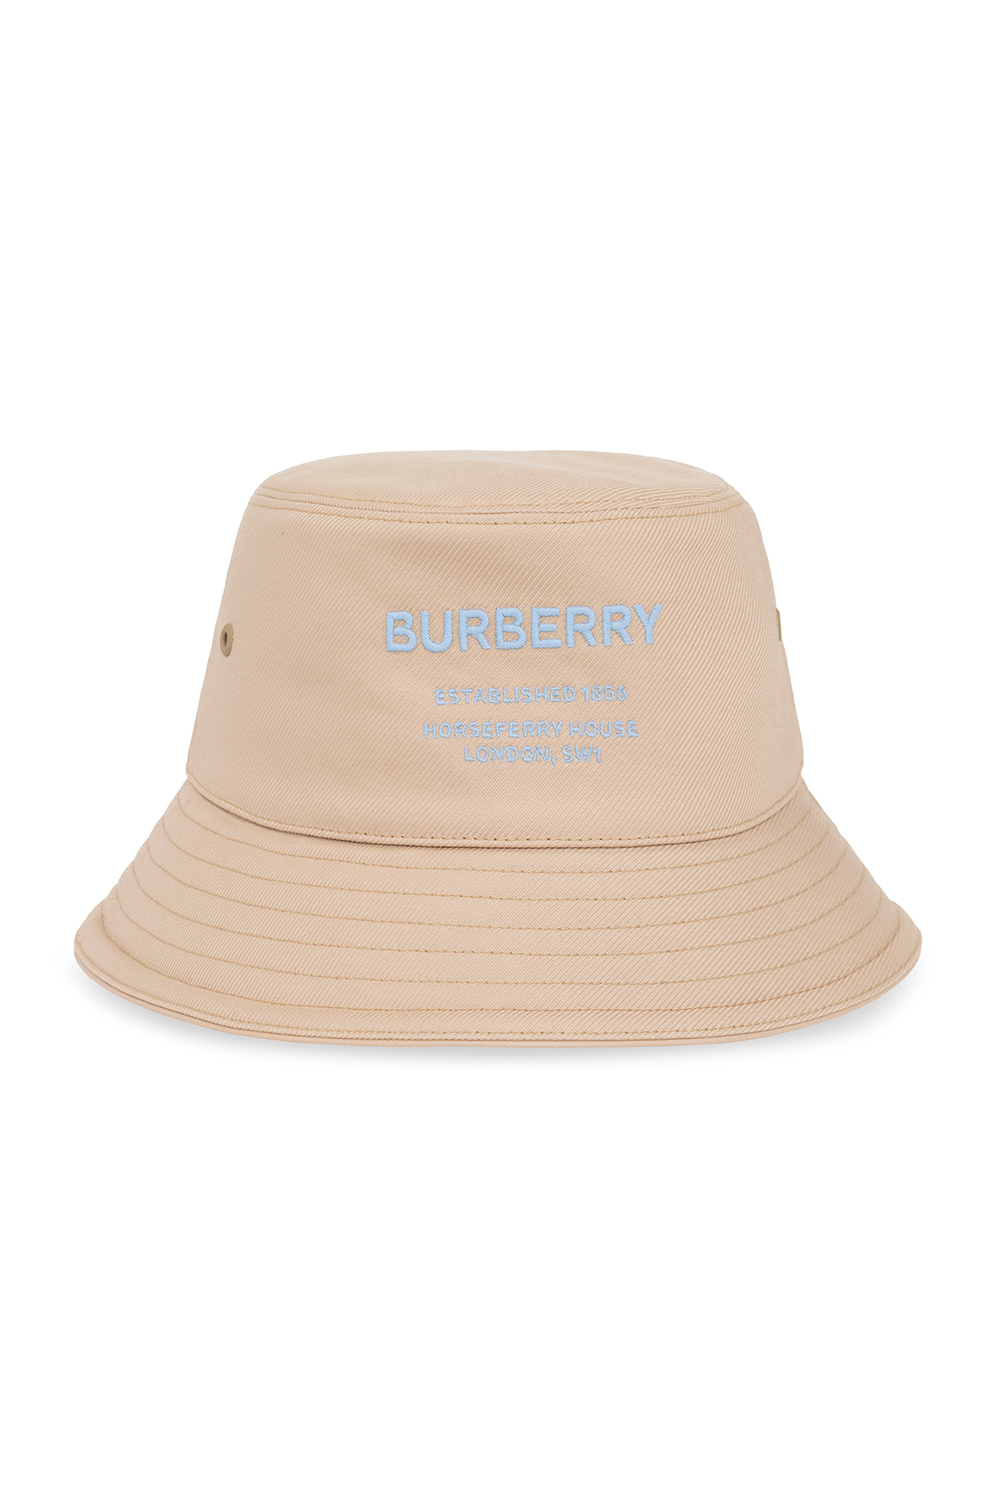 Burberry Boys Olive Green Classic Cap